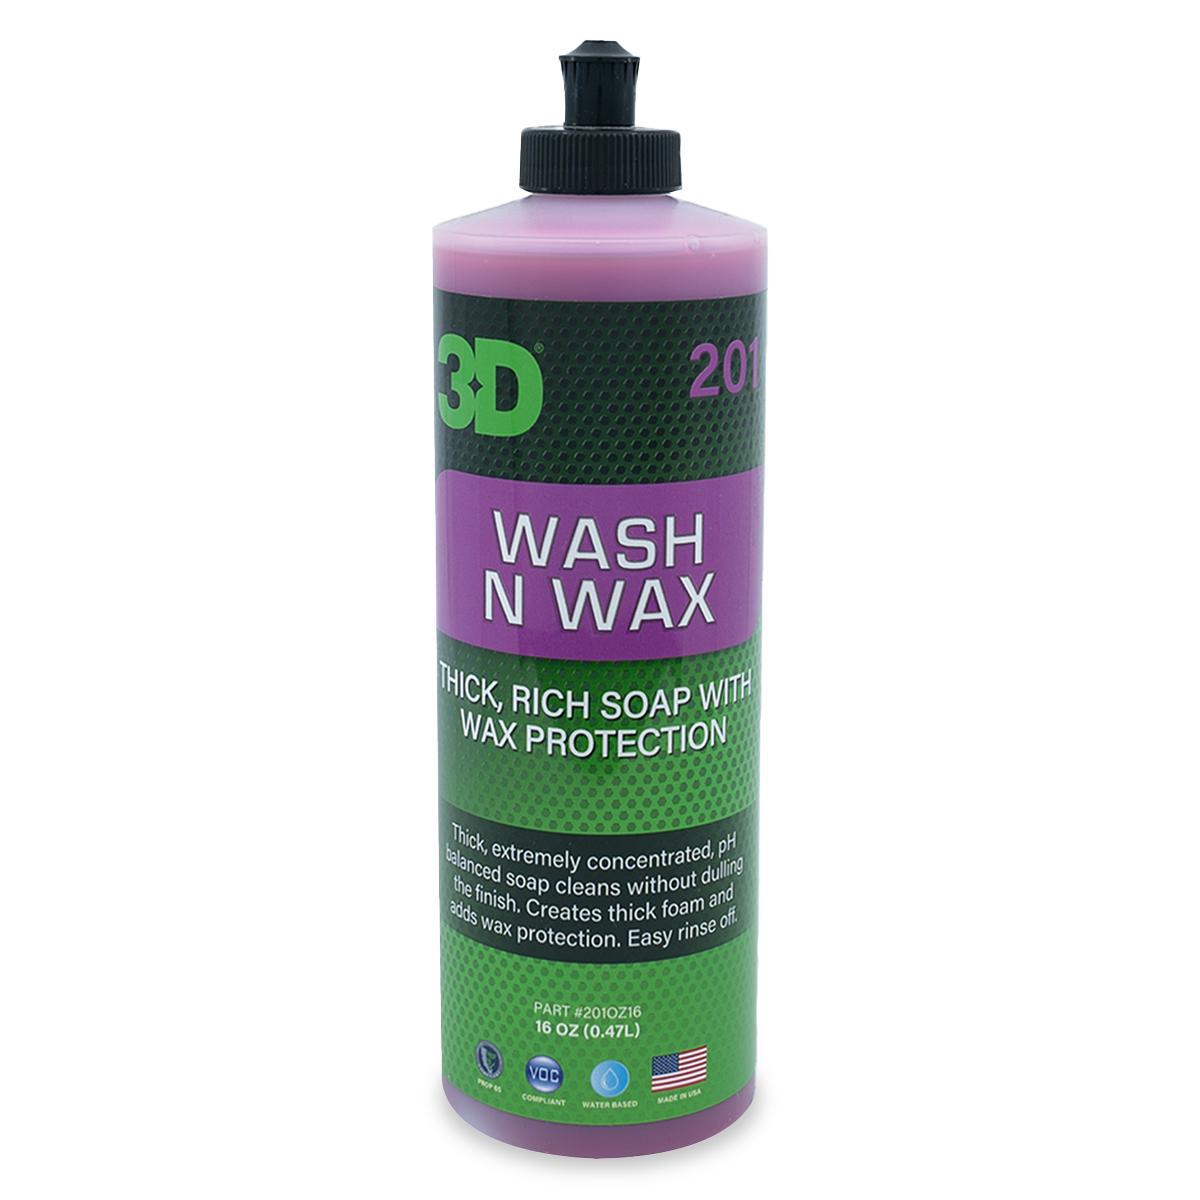 P&S Spray It 1 Gallon  Quick Polymer Spray Wax